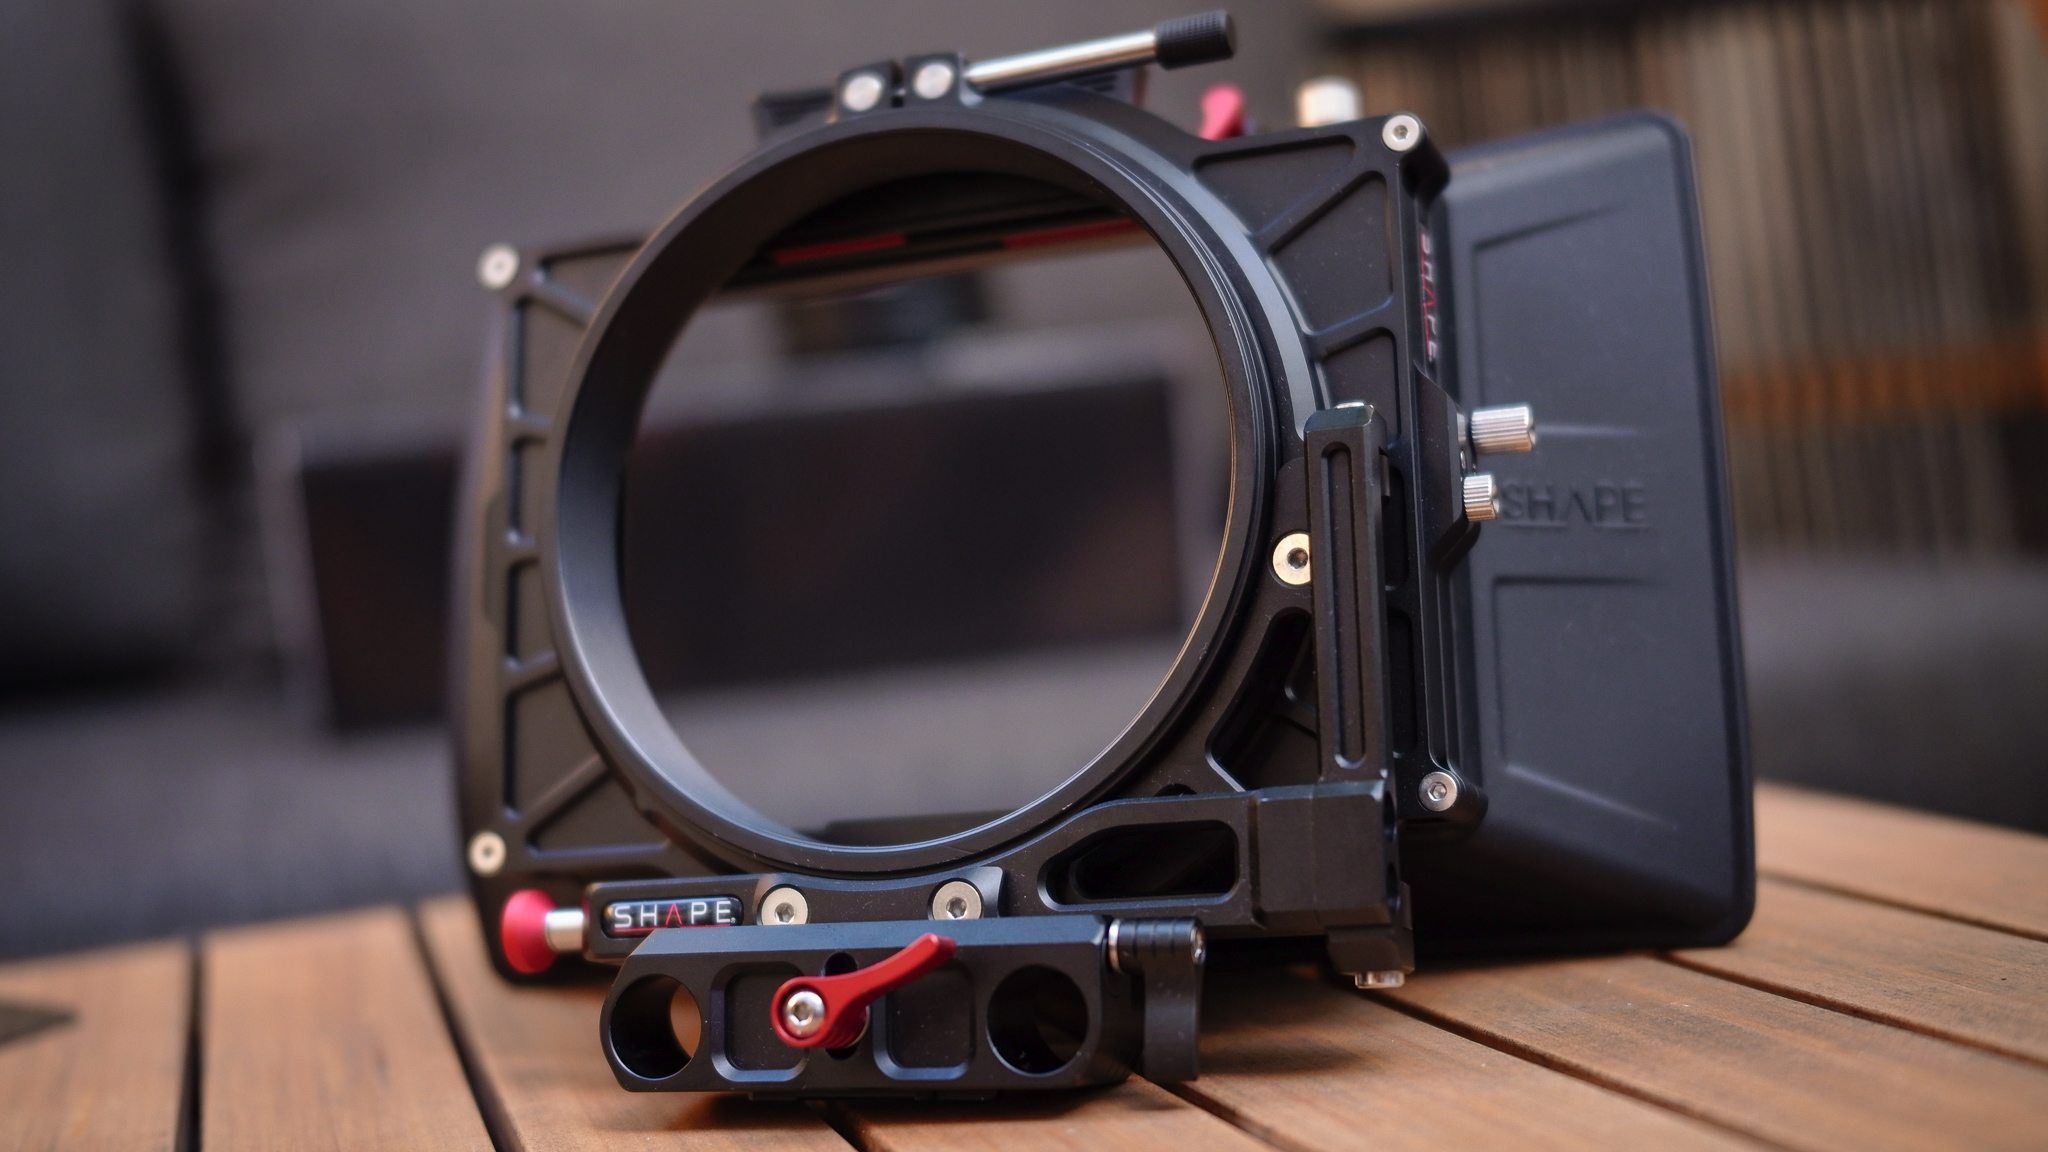 Proaim MB 30 SWING-AWAY Video Camera Matte Box —